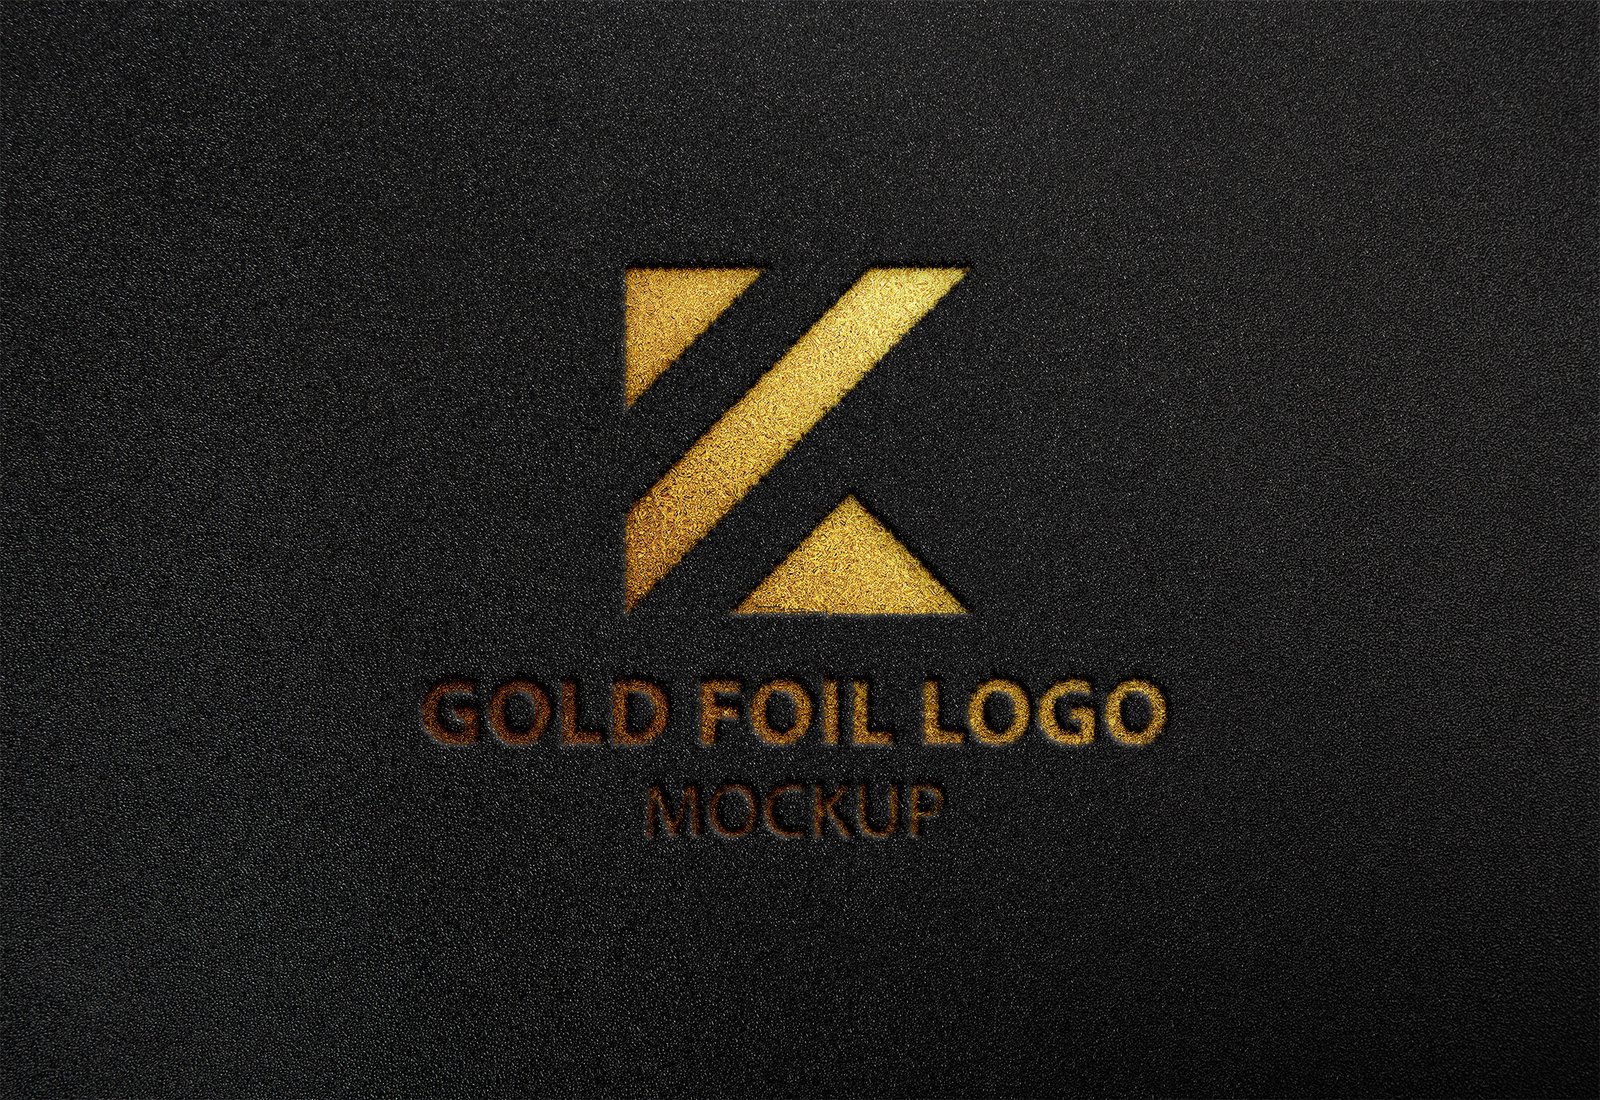 Free Gold Foil Logo Mockup Vol 2 Psd Template Mockup Den